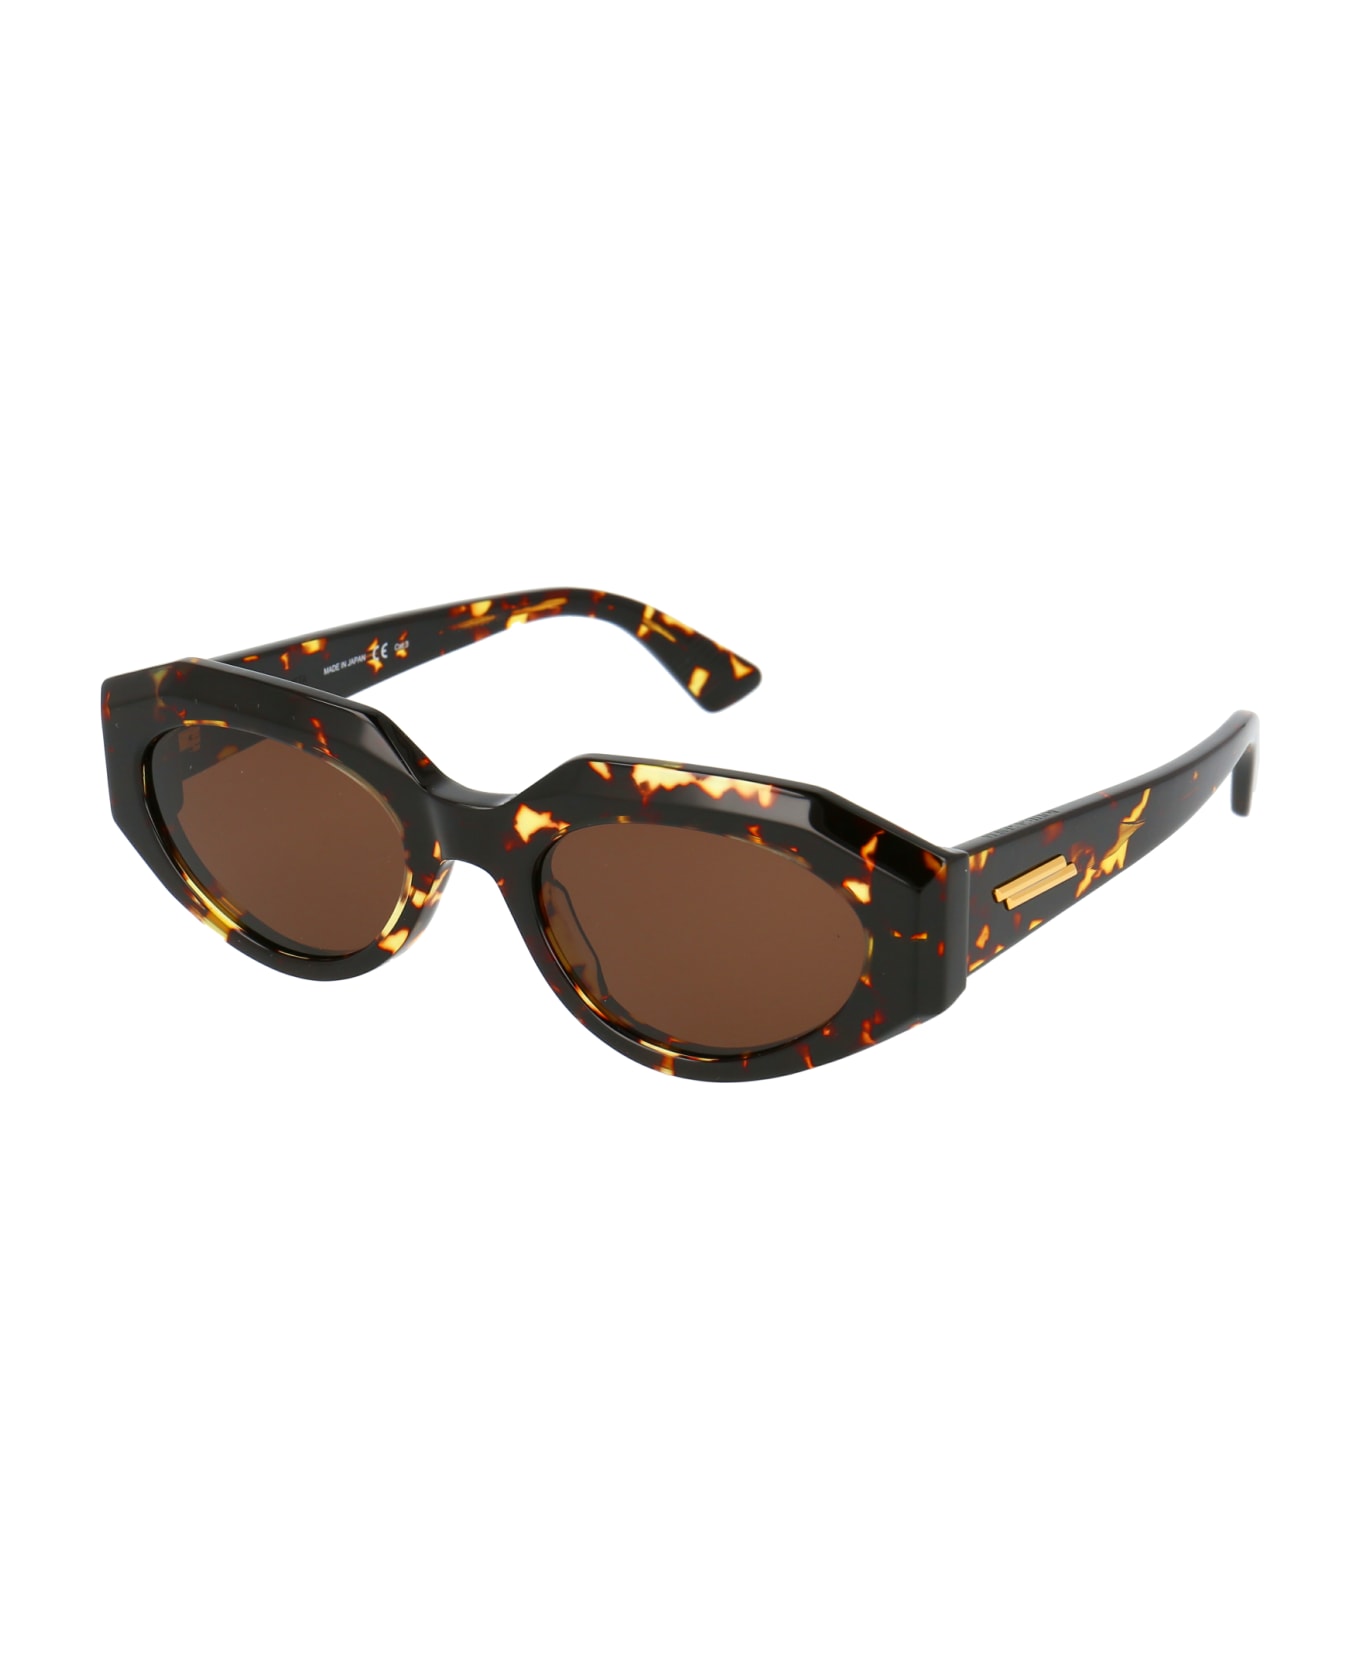 Bottega Veneta Eyewear Bv1031s Sunglasses - 002 HAVANA HAVANA BROWN